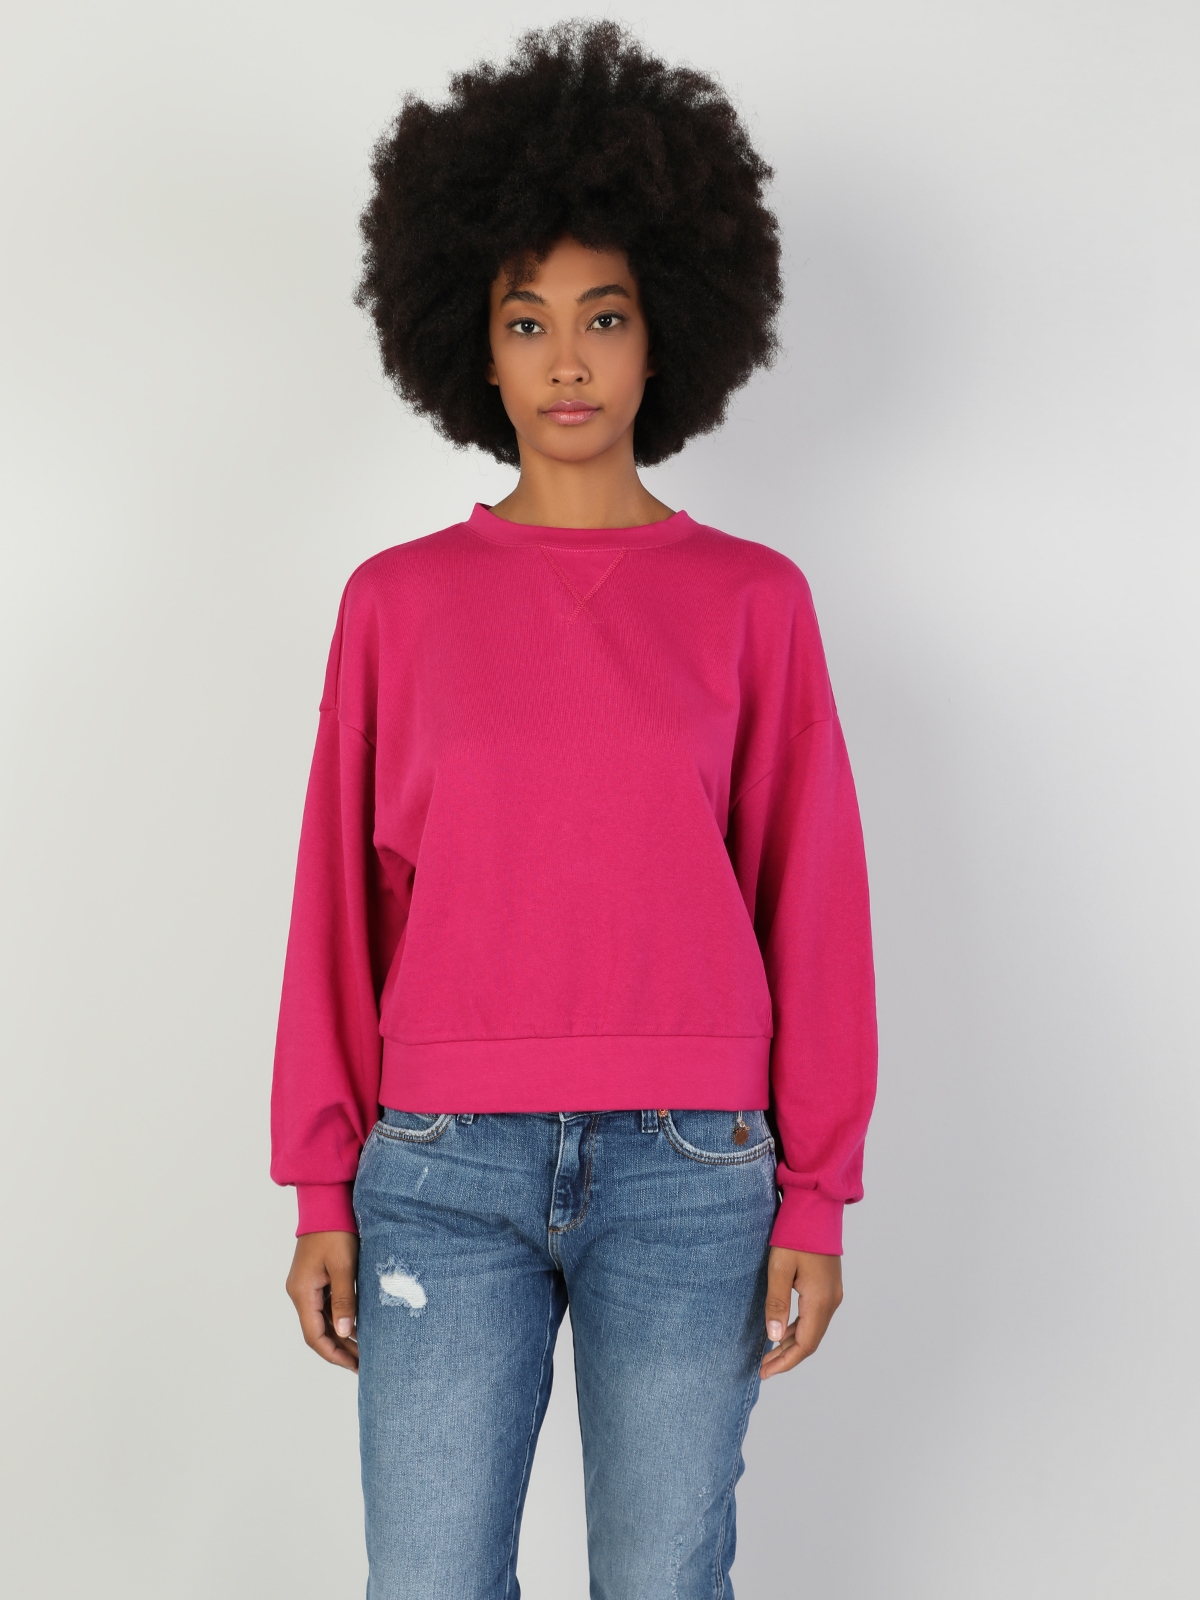 Colins Pınk Woman Sweatshirt. 4